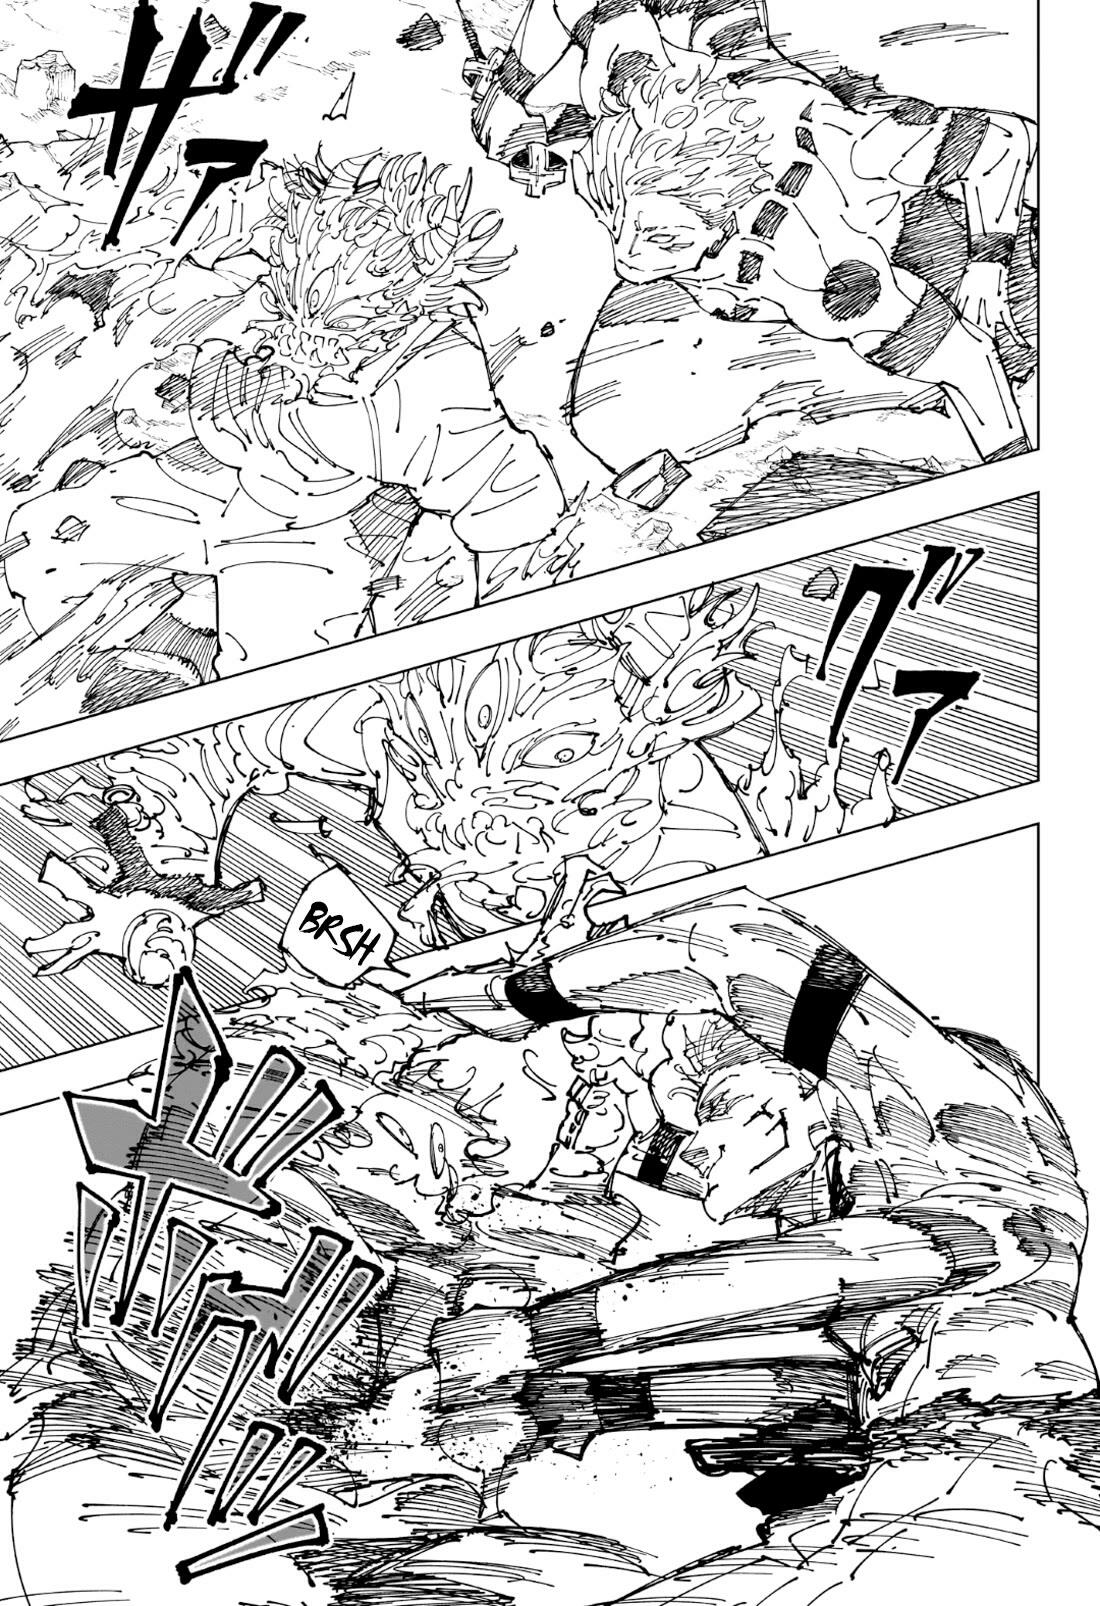 Jujutsu Kaisen Chapter 238: Chapter 238: The Decisive Battle In The Uninhabited, Demon-Infested Shinjuku ⑮ page 11 - Mangakakalot